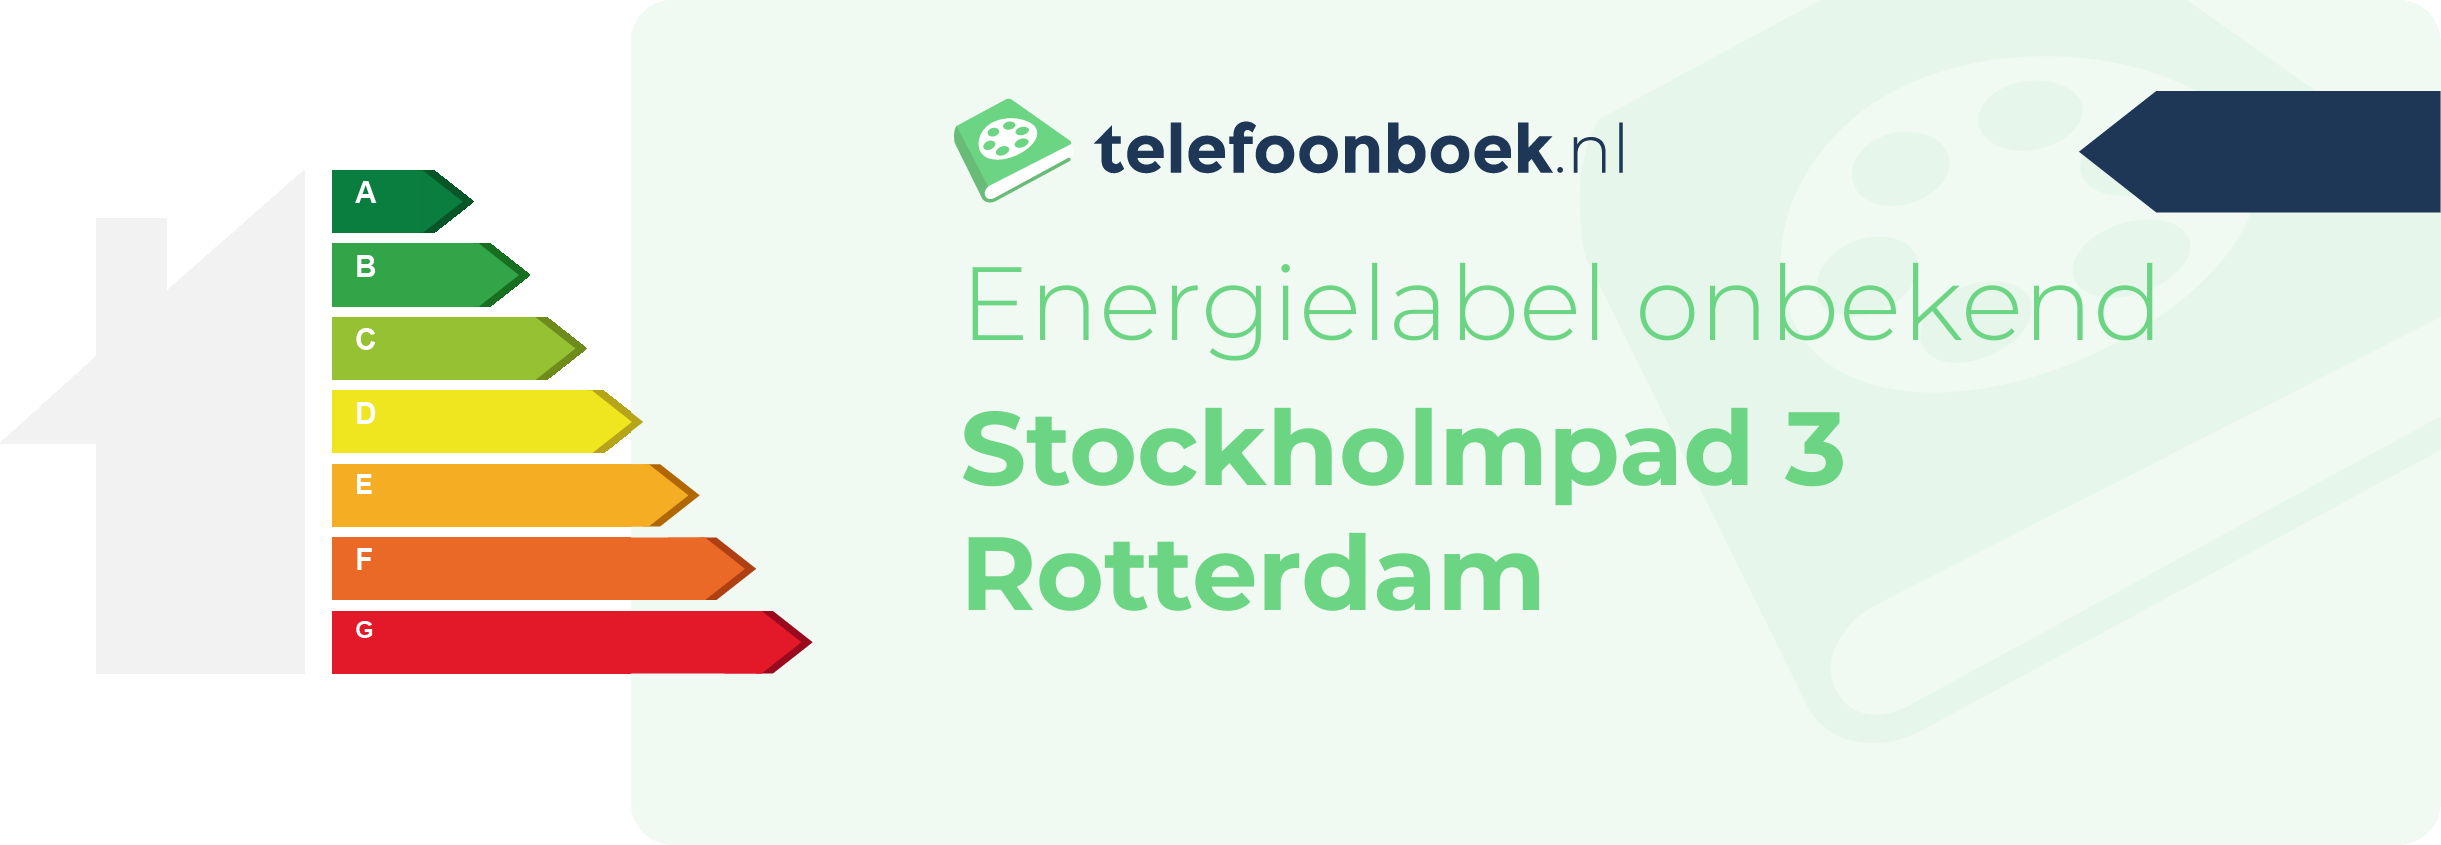 Energielabel Stockholmpad 3 Rotterdam